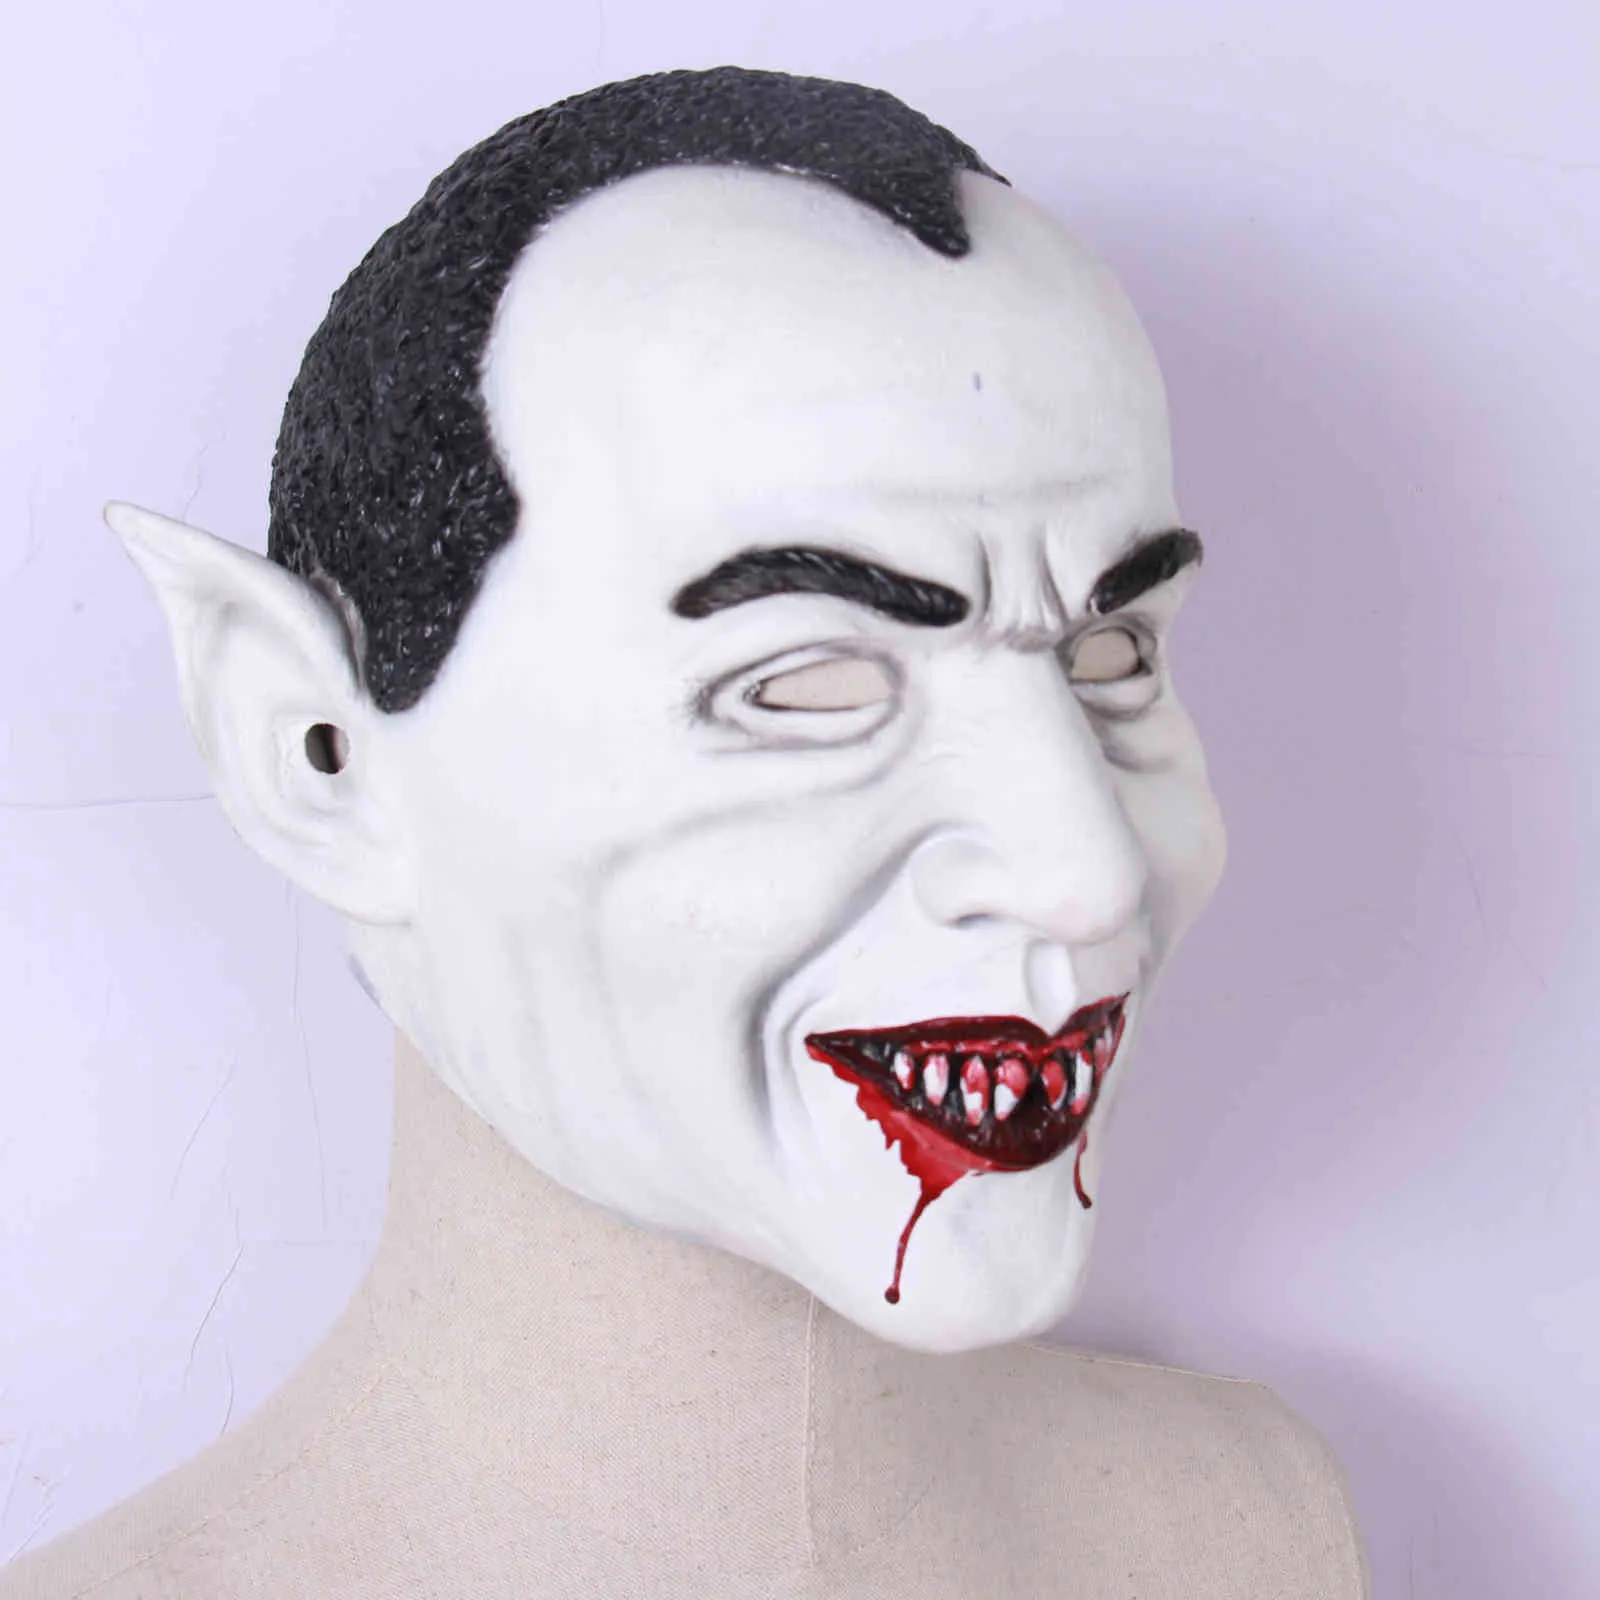 Deadly Silence Effrayant Zombie Latex Diable Creepy Adulte Halloween Mardi Gras Vampire Masque Costume Overhead